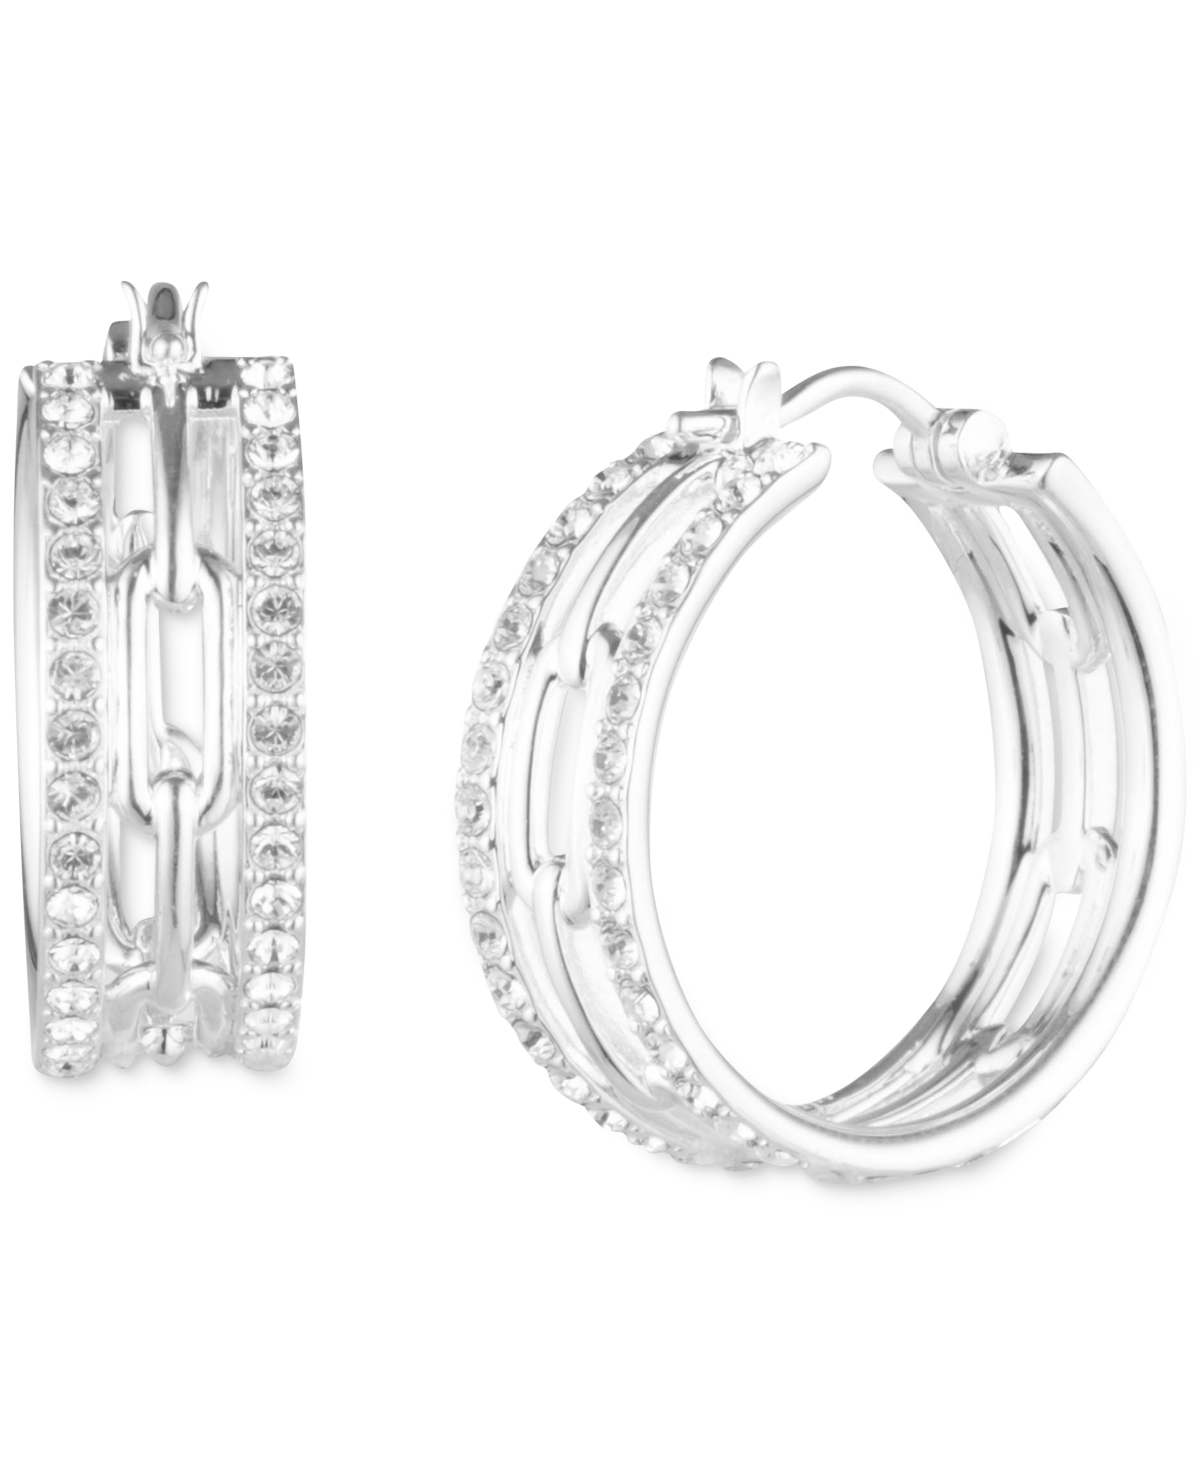 Lauren Ralph Lauren Crystal Chain Link Motif Small Hoop Earrings in Sterling Silver, 0.81" - Sterling Silver